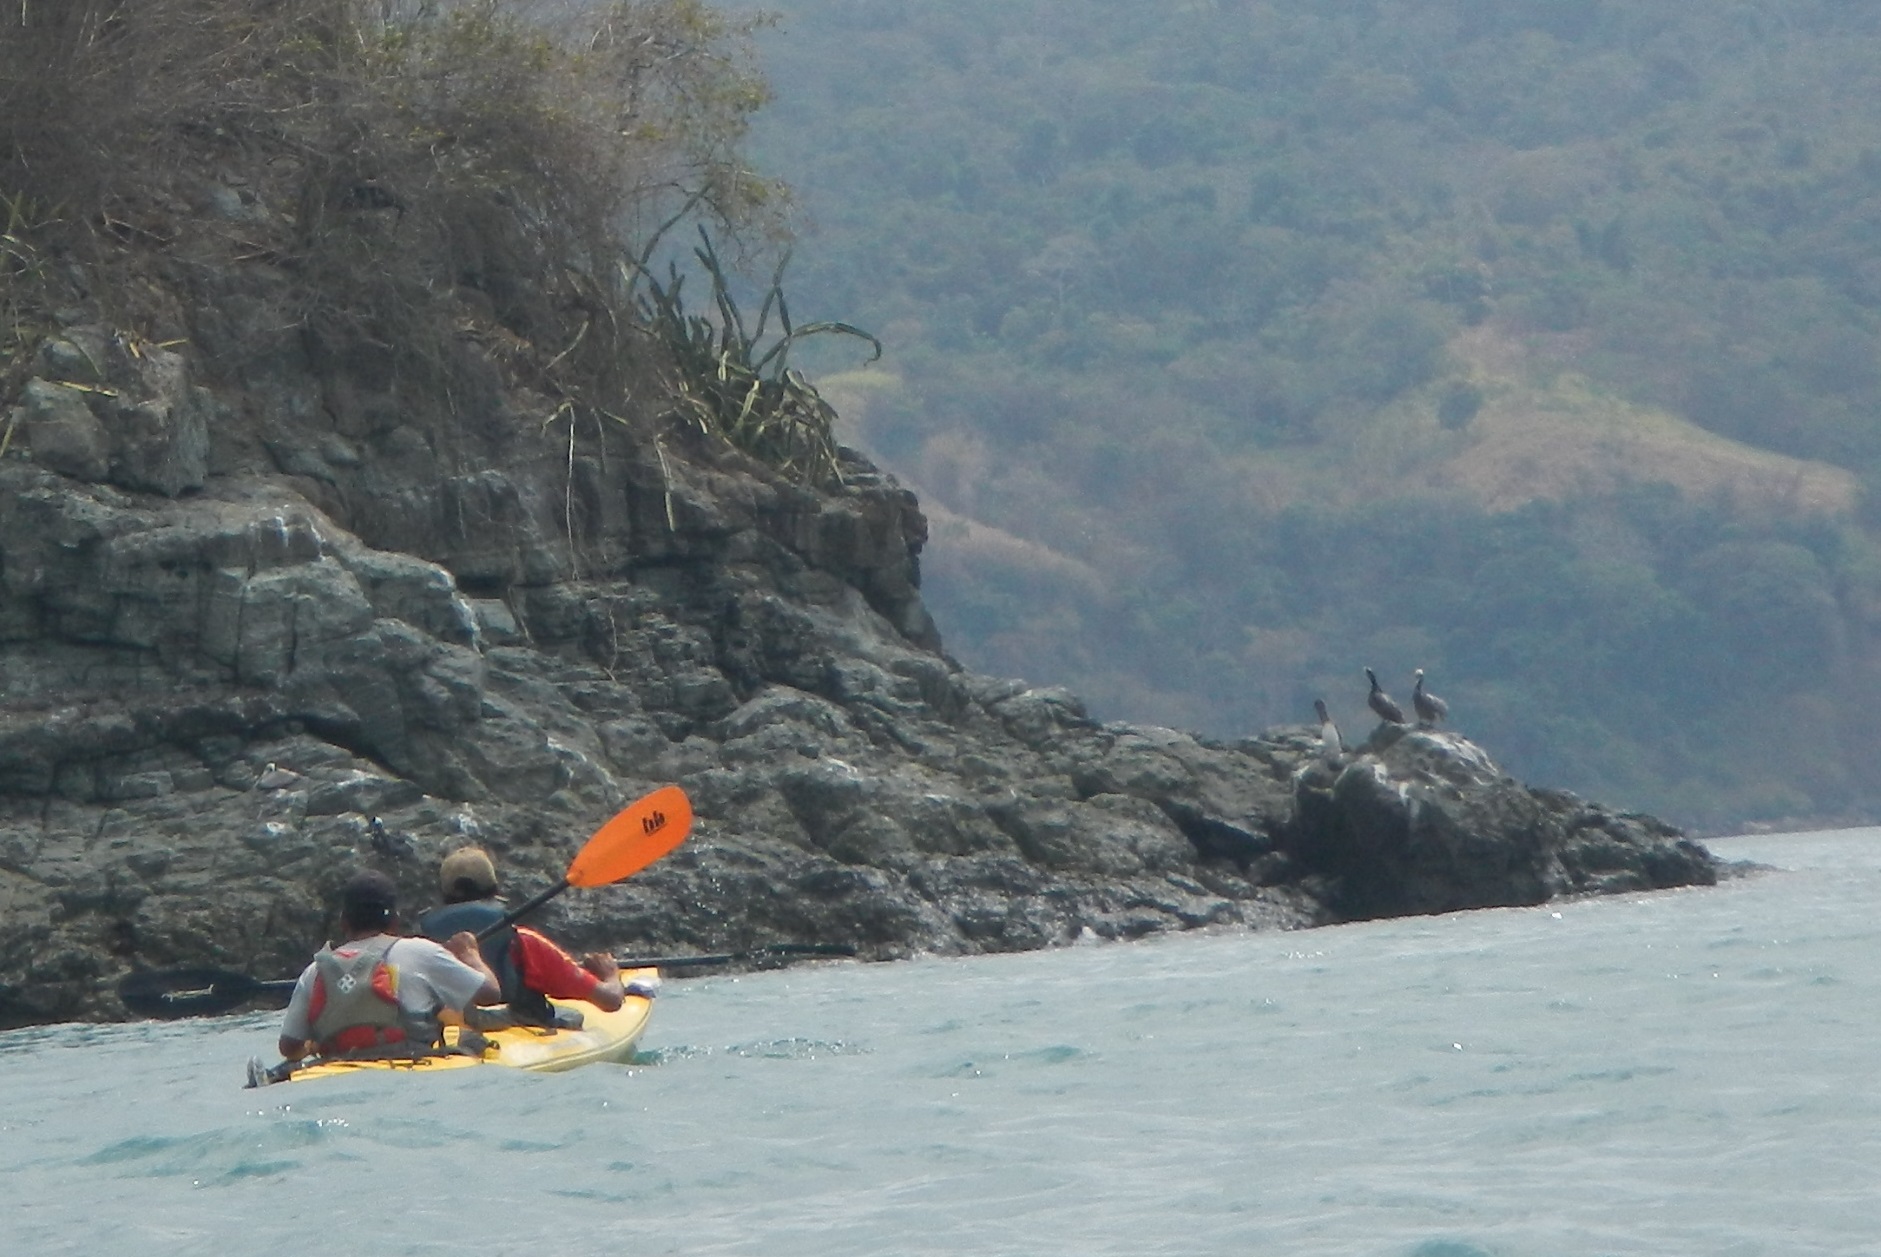 reaching taboga pelican corner in expedition kayak